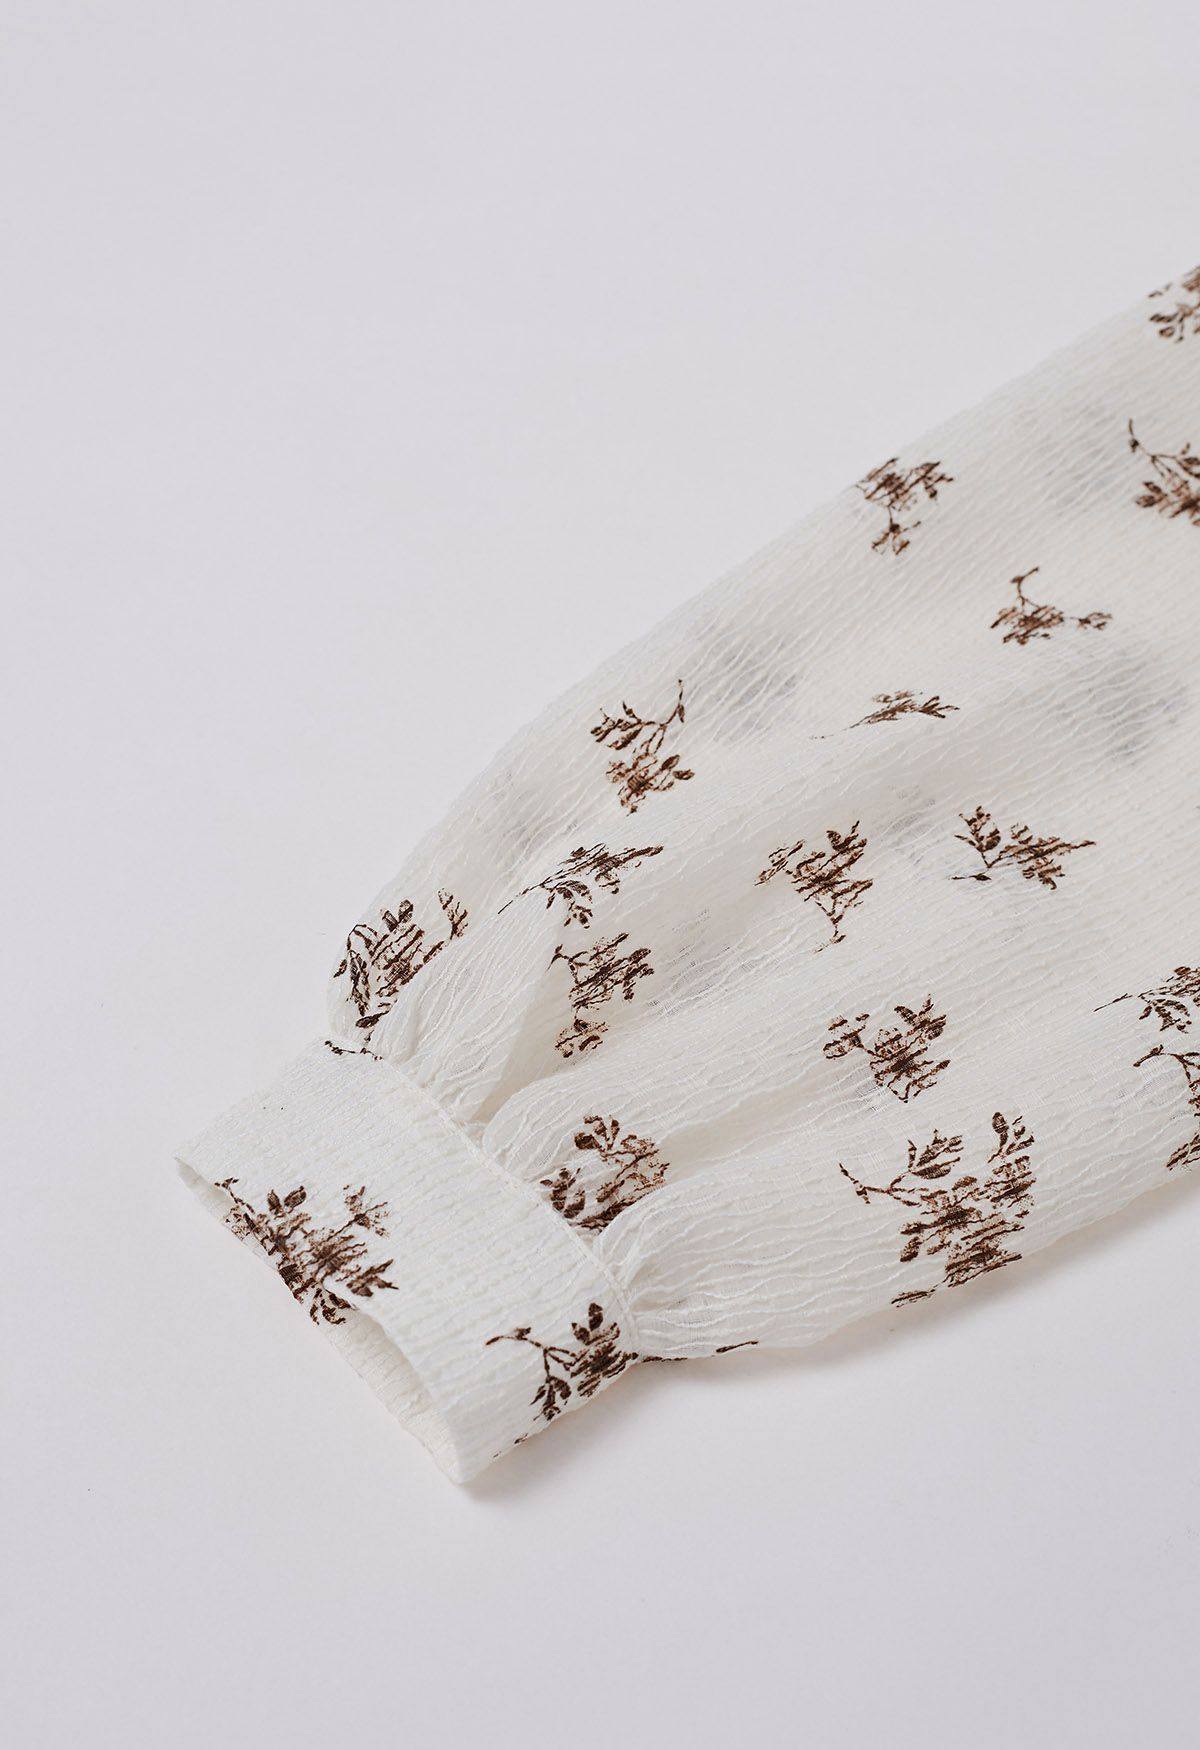 Floret Print Texture Button Down Shirt in Cream